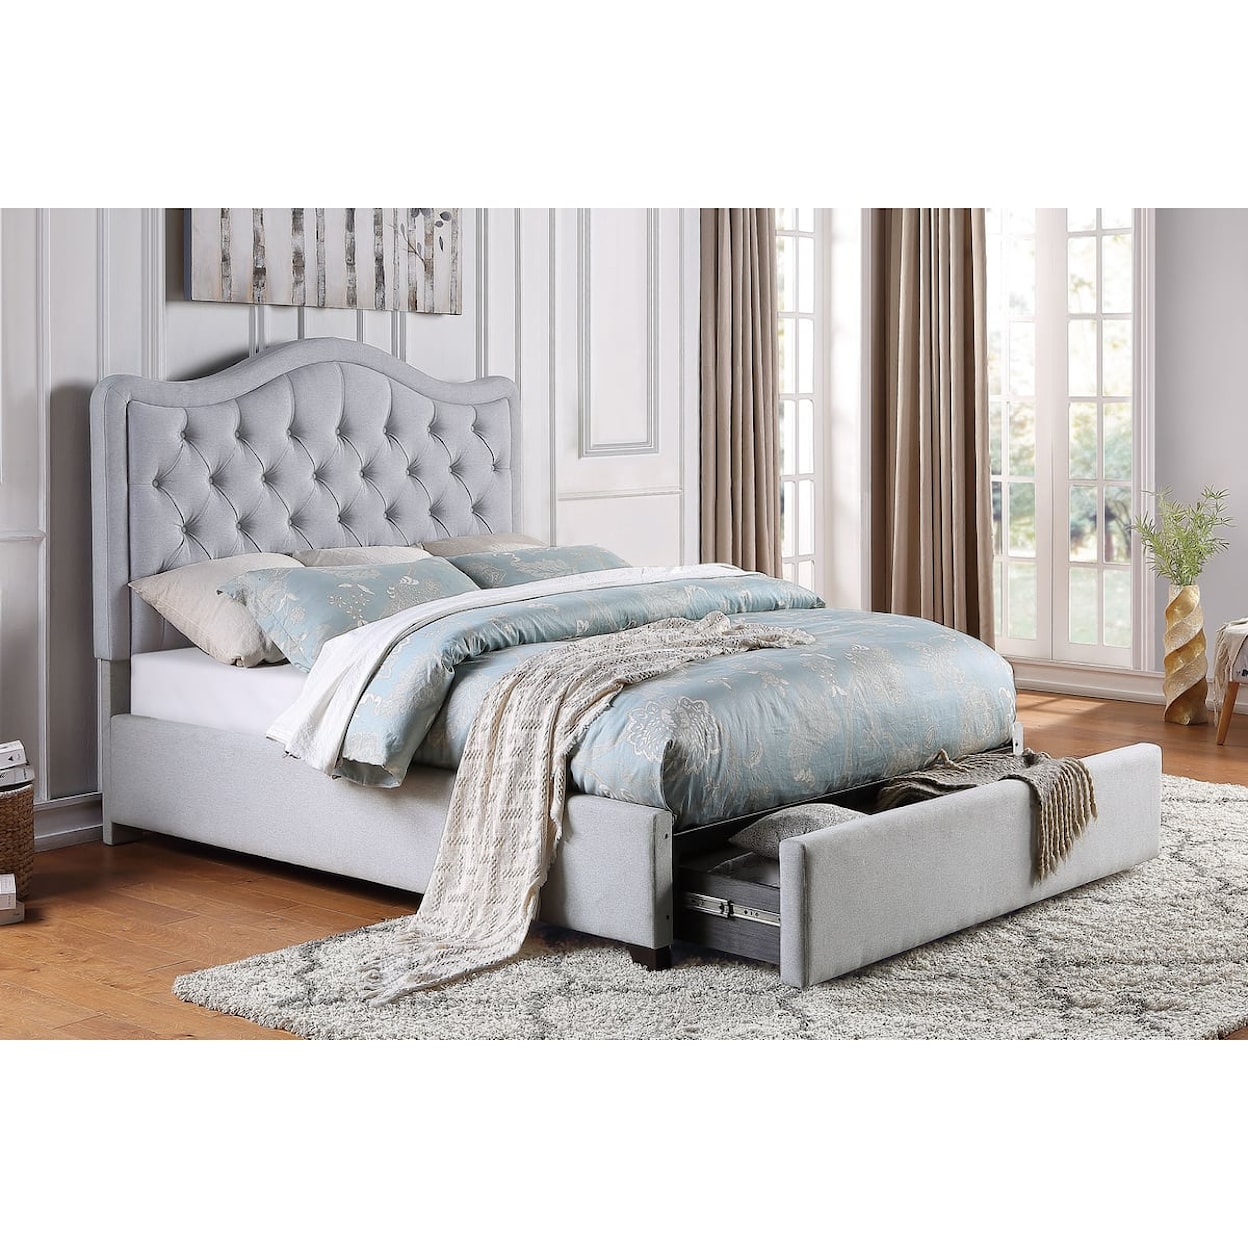 Homelegance Furniture Toddrick Queen Platform Bed with Storage Drawers